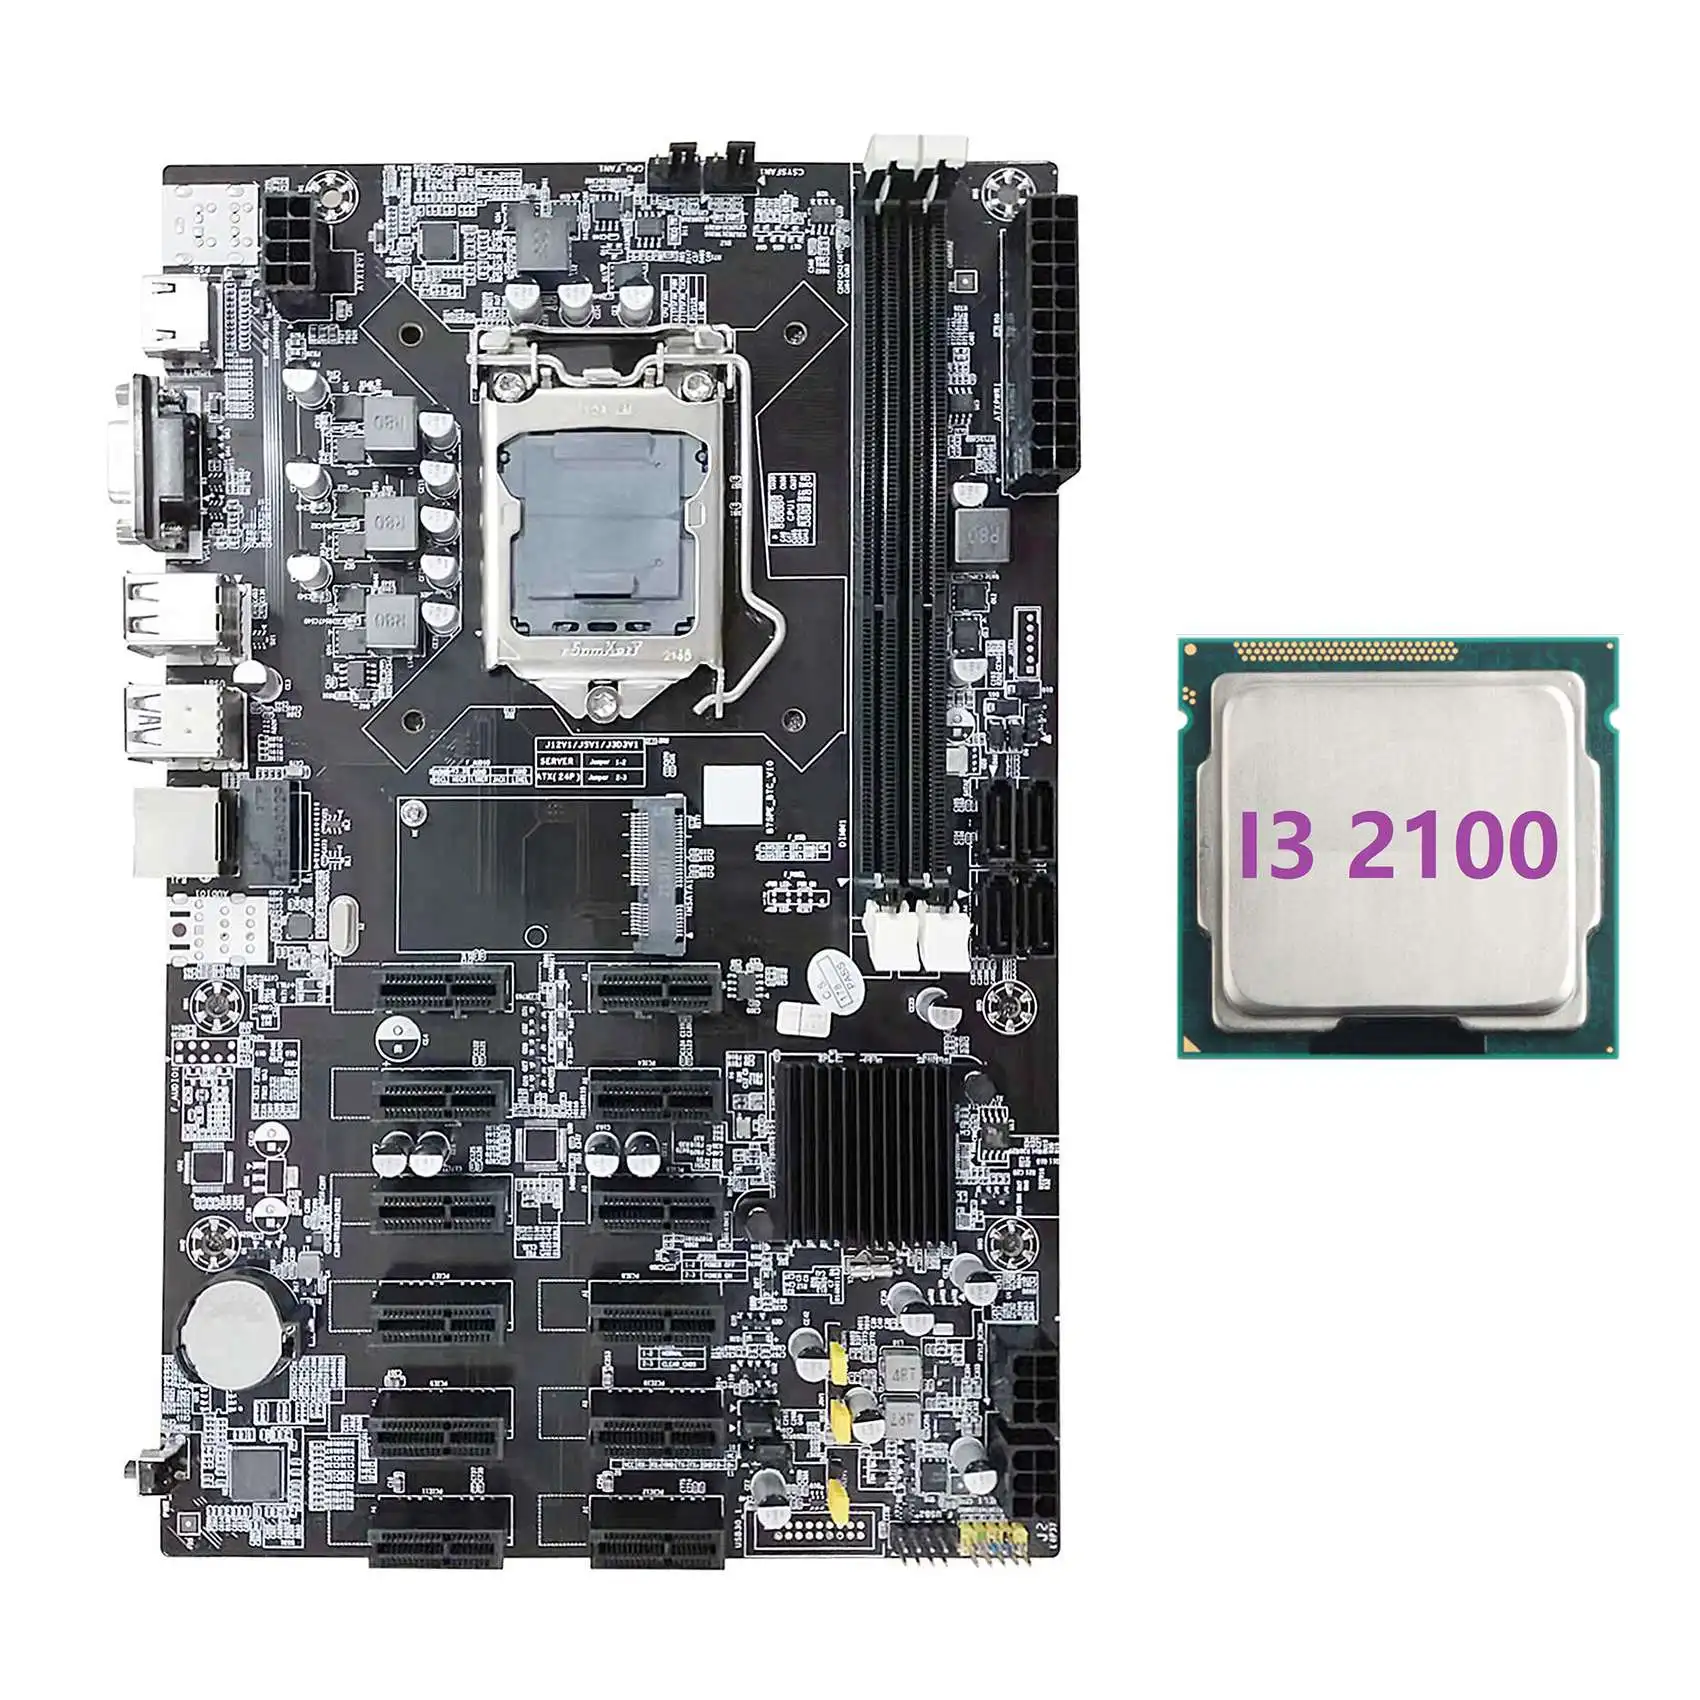 B75 12 PCIE ETH Mining Motherboard+I3 2100 CPU LGA1155 MSATA USB3.0 SATA3.0 Support DDR3 RAM B75 BTC Miner Motherboard